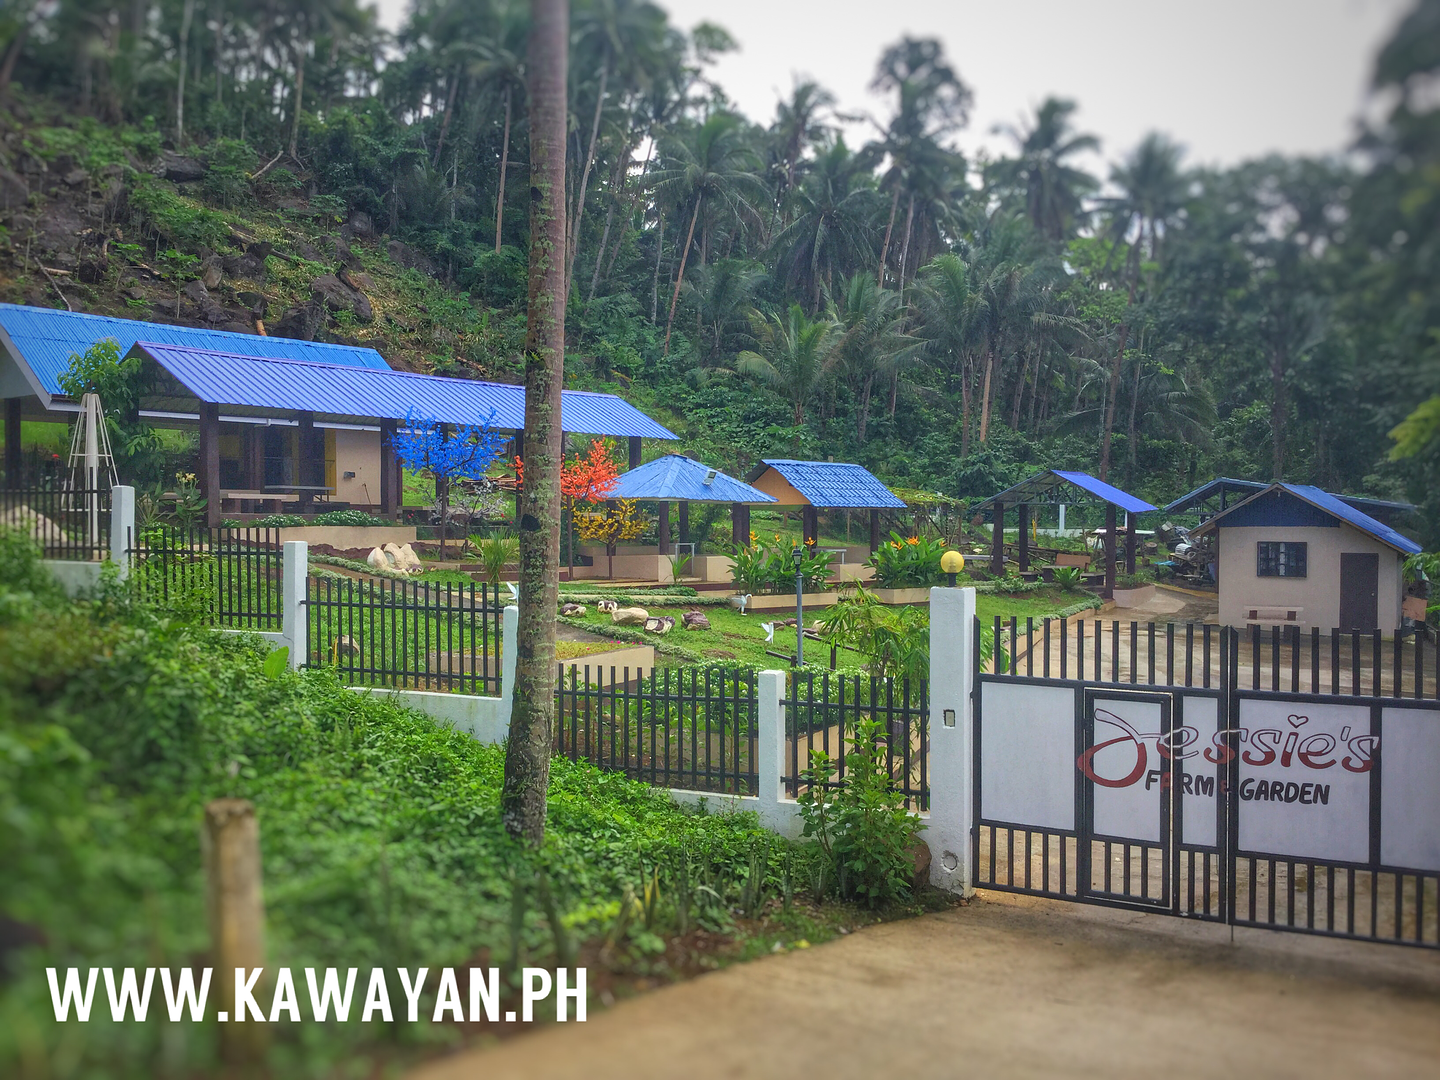 Kawayan Jessies Farm Garden Resort